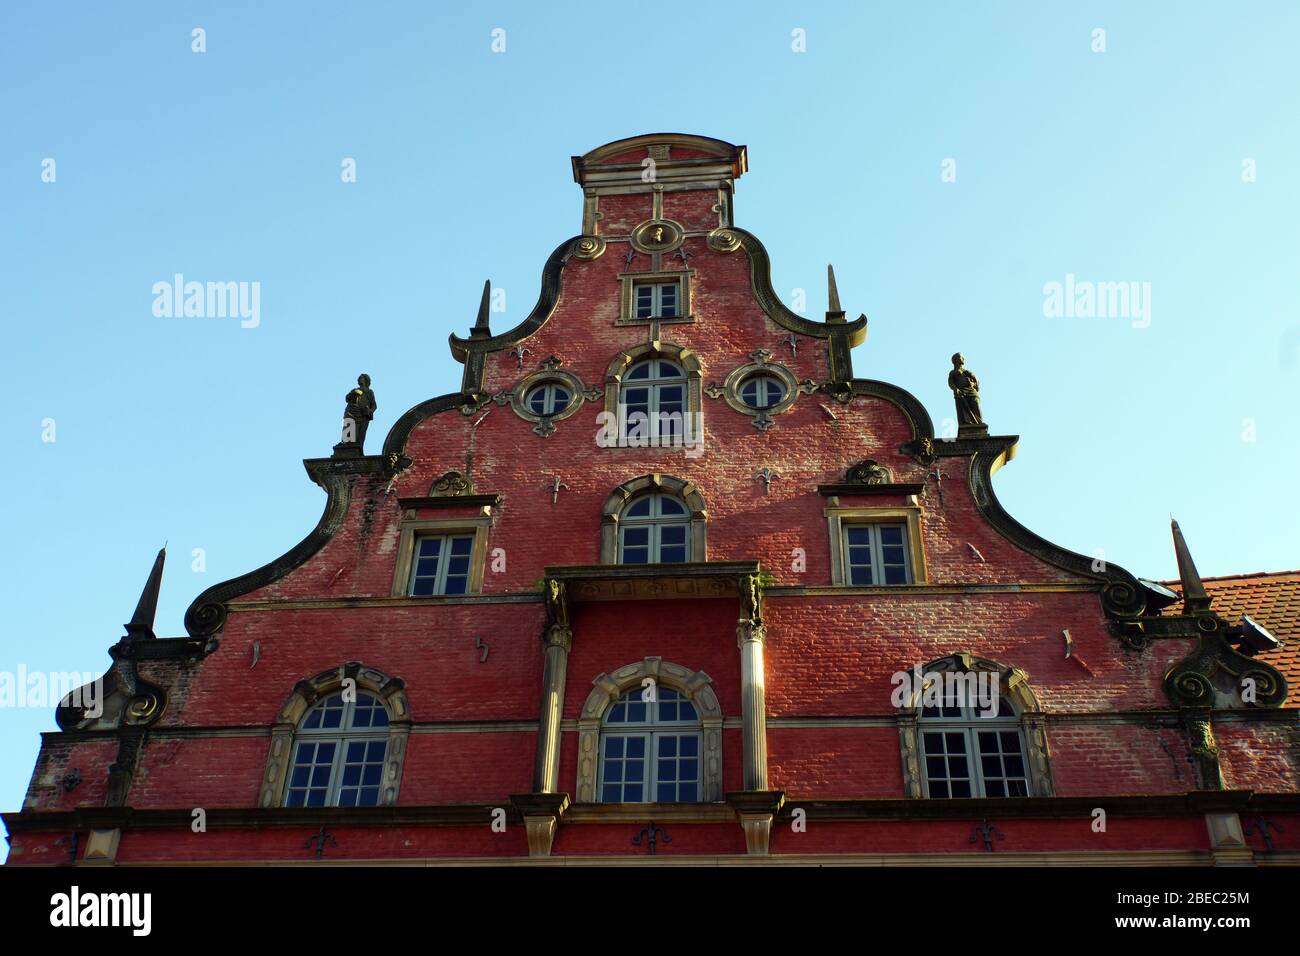 Schabbelhaus - Baudenkmal in der historischen Altstadt, Wismar, Mecklembourg-Poméranie-Occidentale, Deutschland Banque D'Images